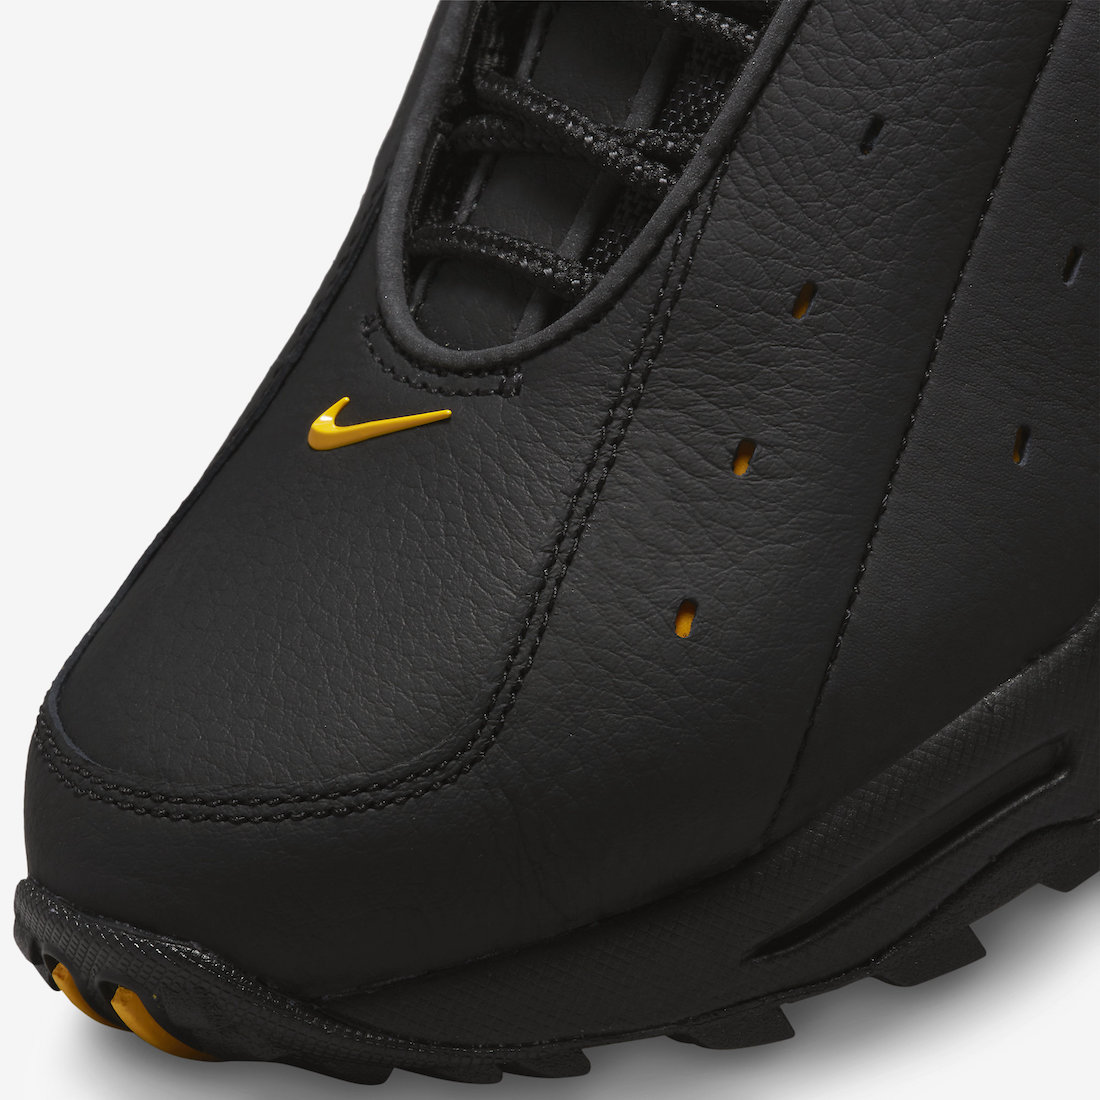 Drake NOCTA Nike Hot Step Air Terra Black University Gold DH4692-002 Release Date